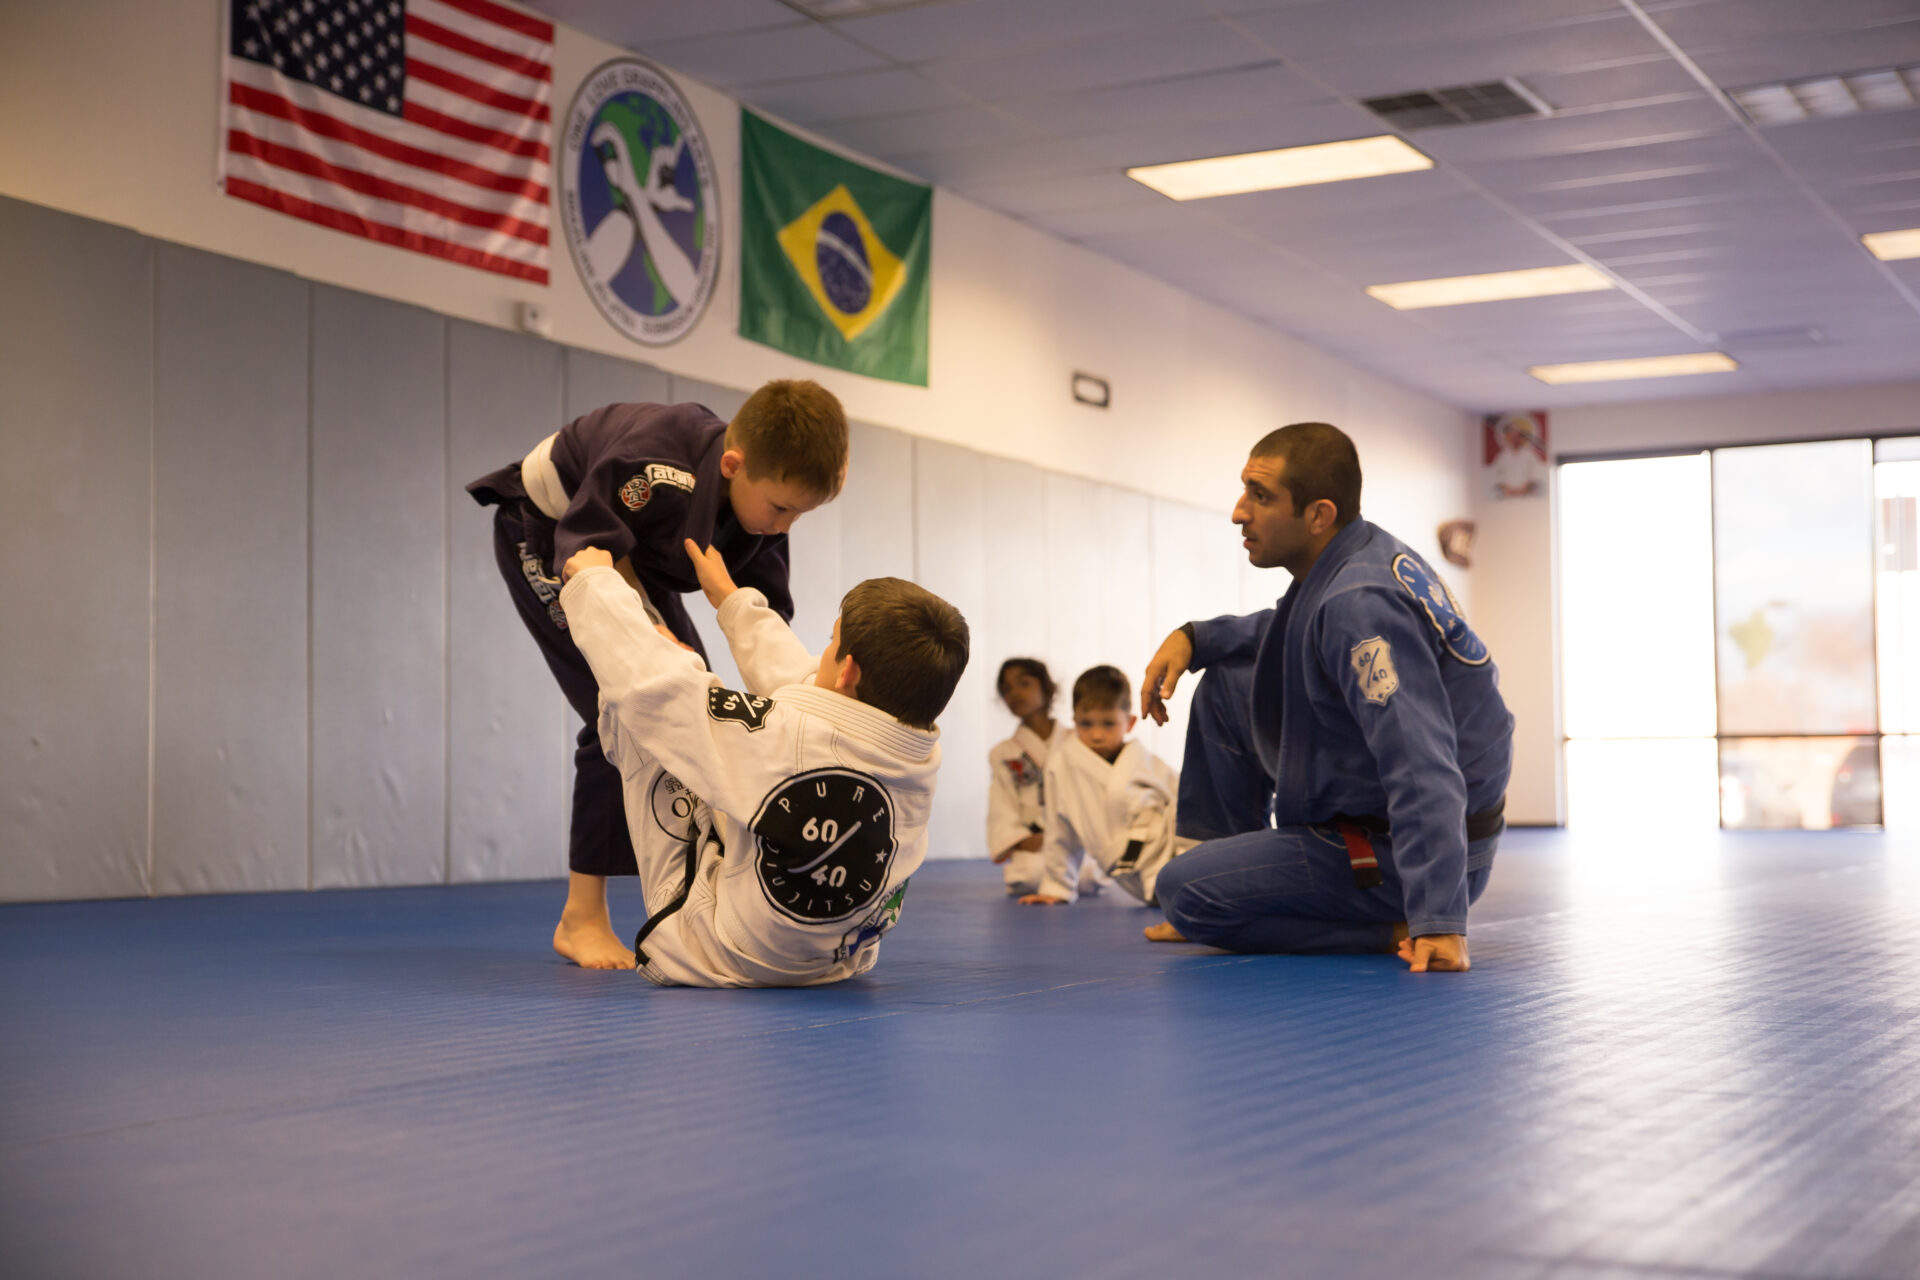 A group of kids practicing jiu jitsu in the gym.